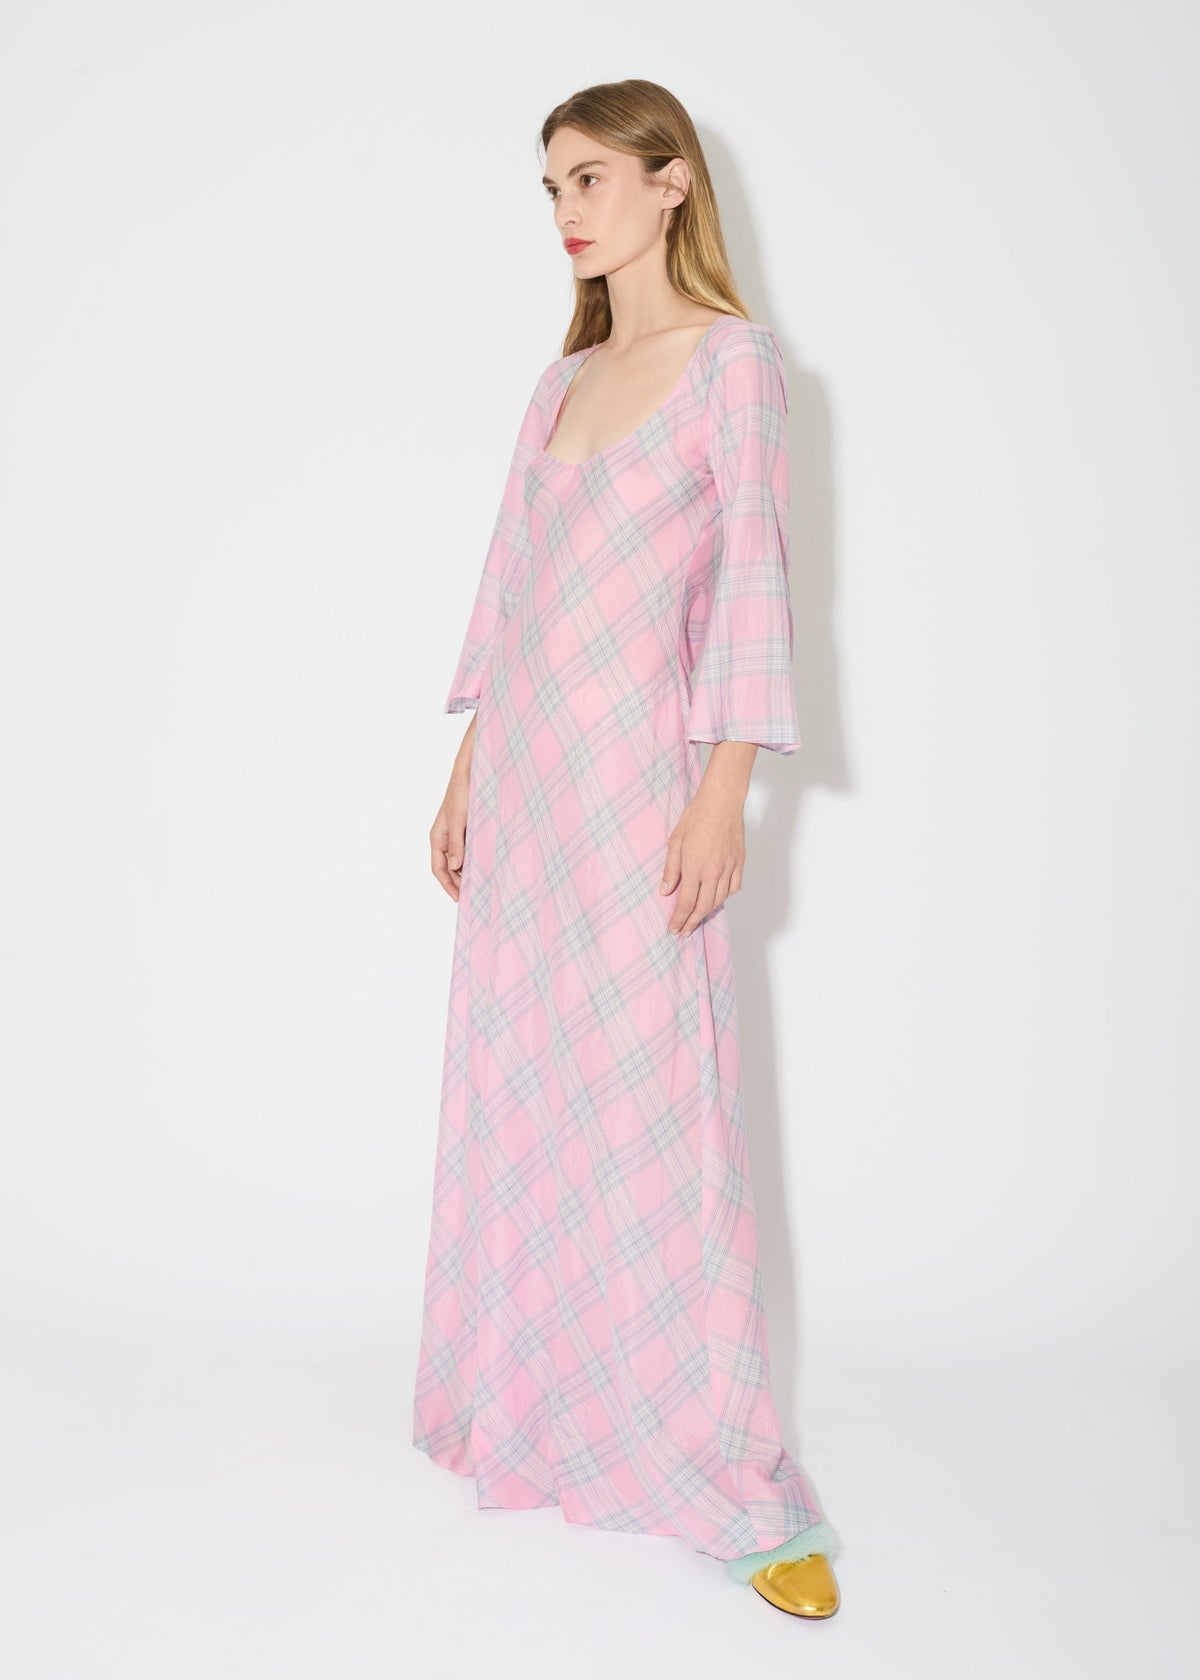 JaneBooke Pink Plaid Cotton Voile Dress